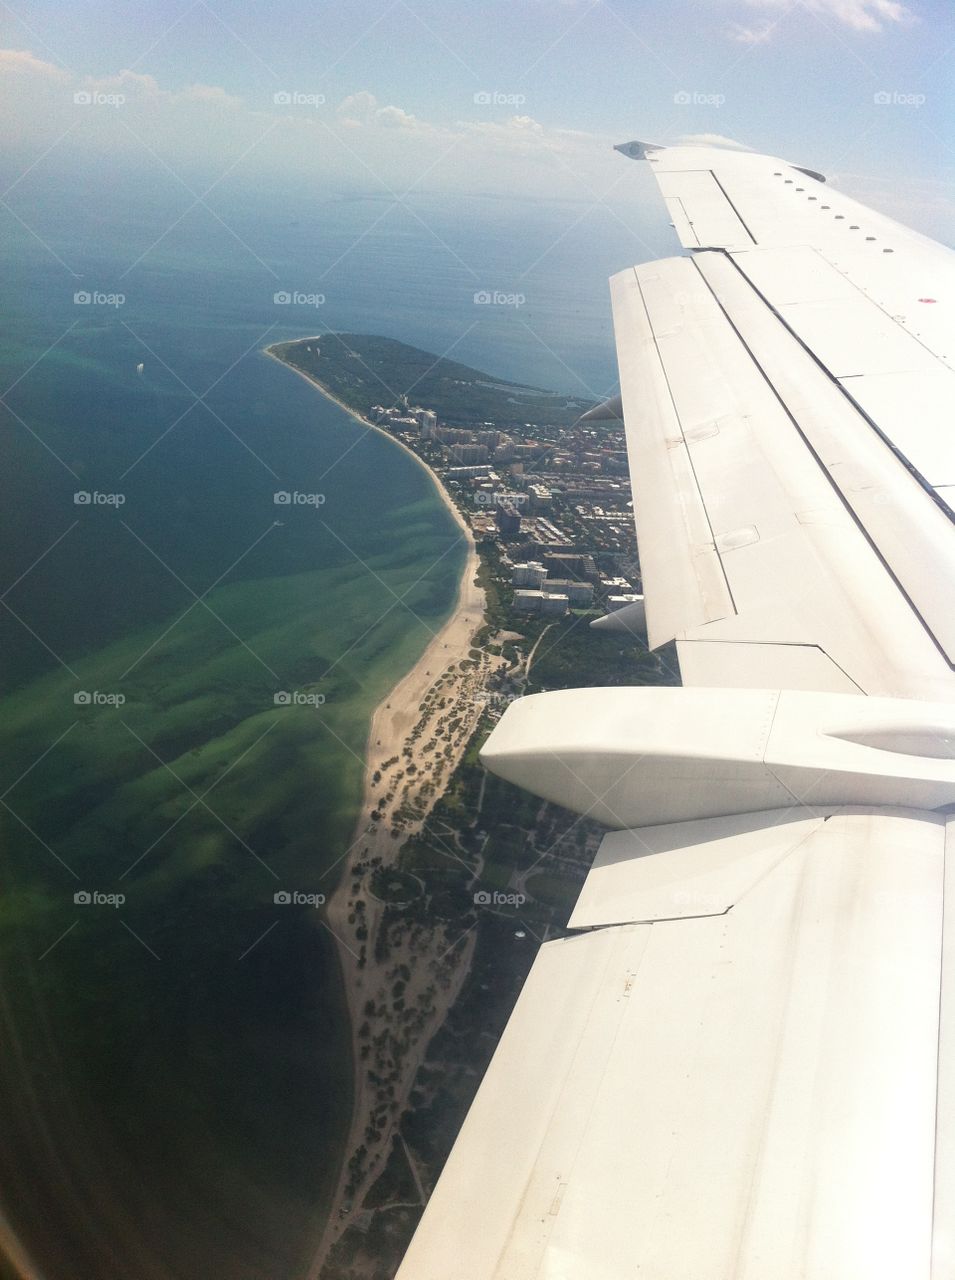 Landing at the Miami International AirPort